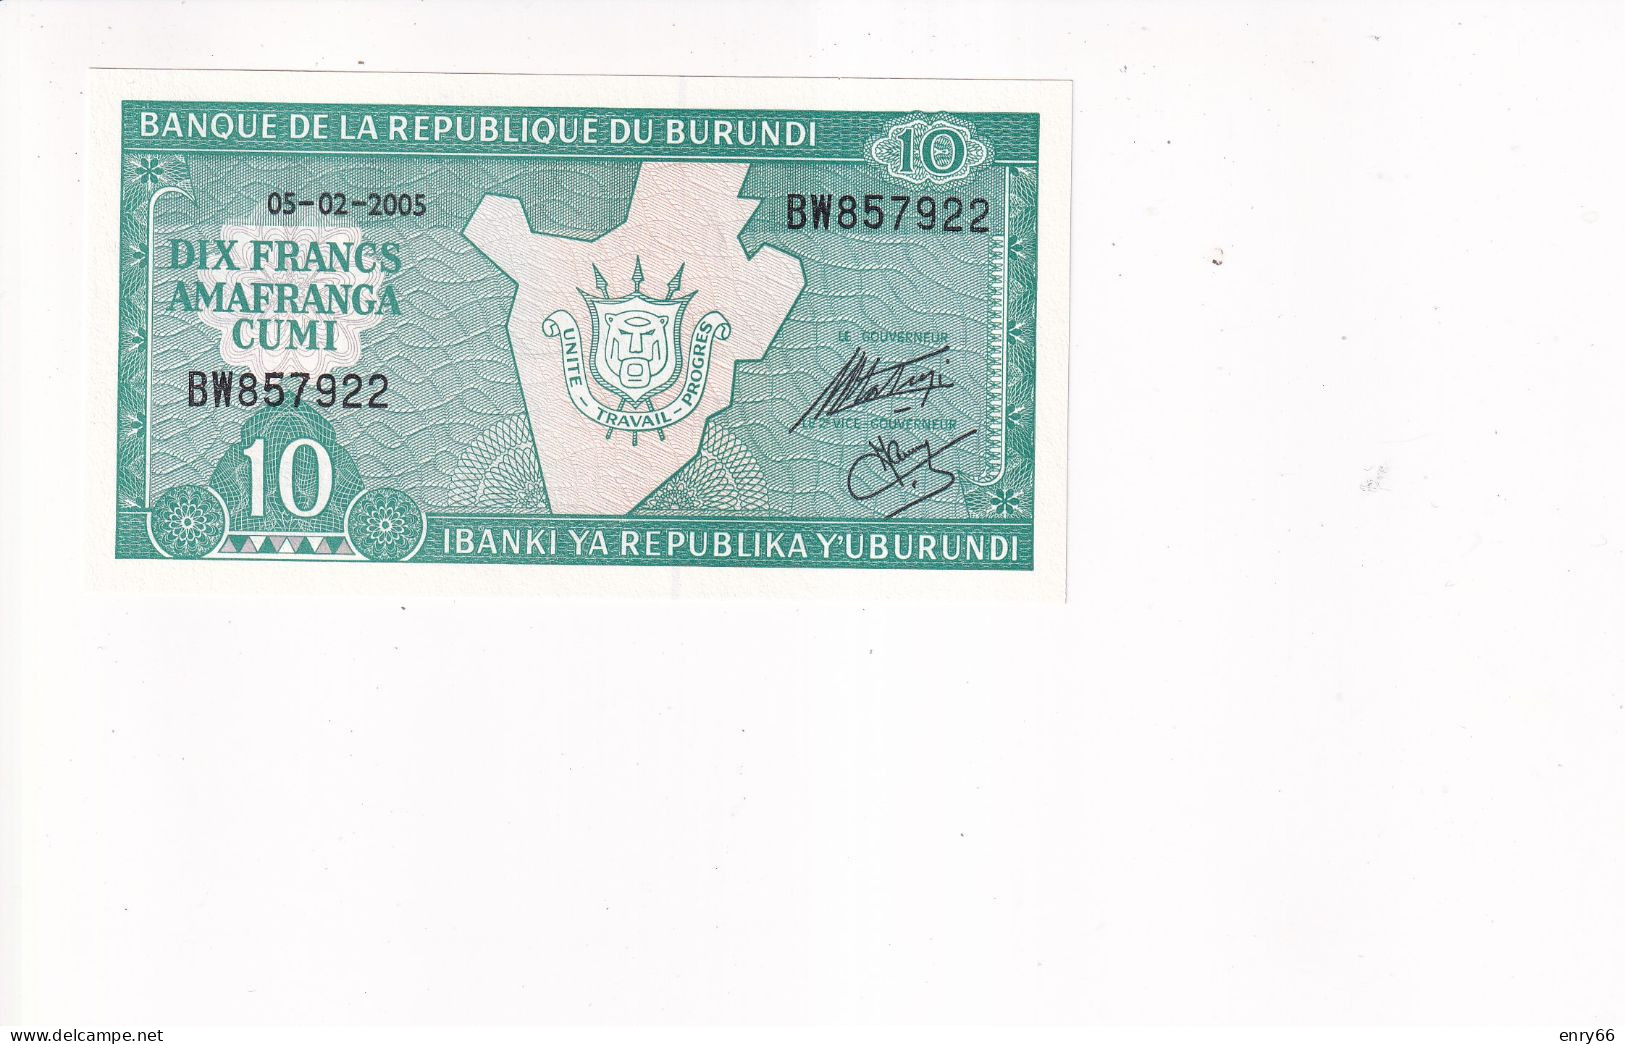 BURUNDI 10 FRANCS 2005 P33E UNC - Burundi